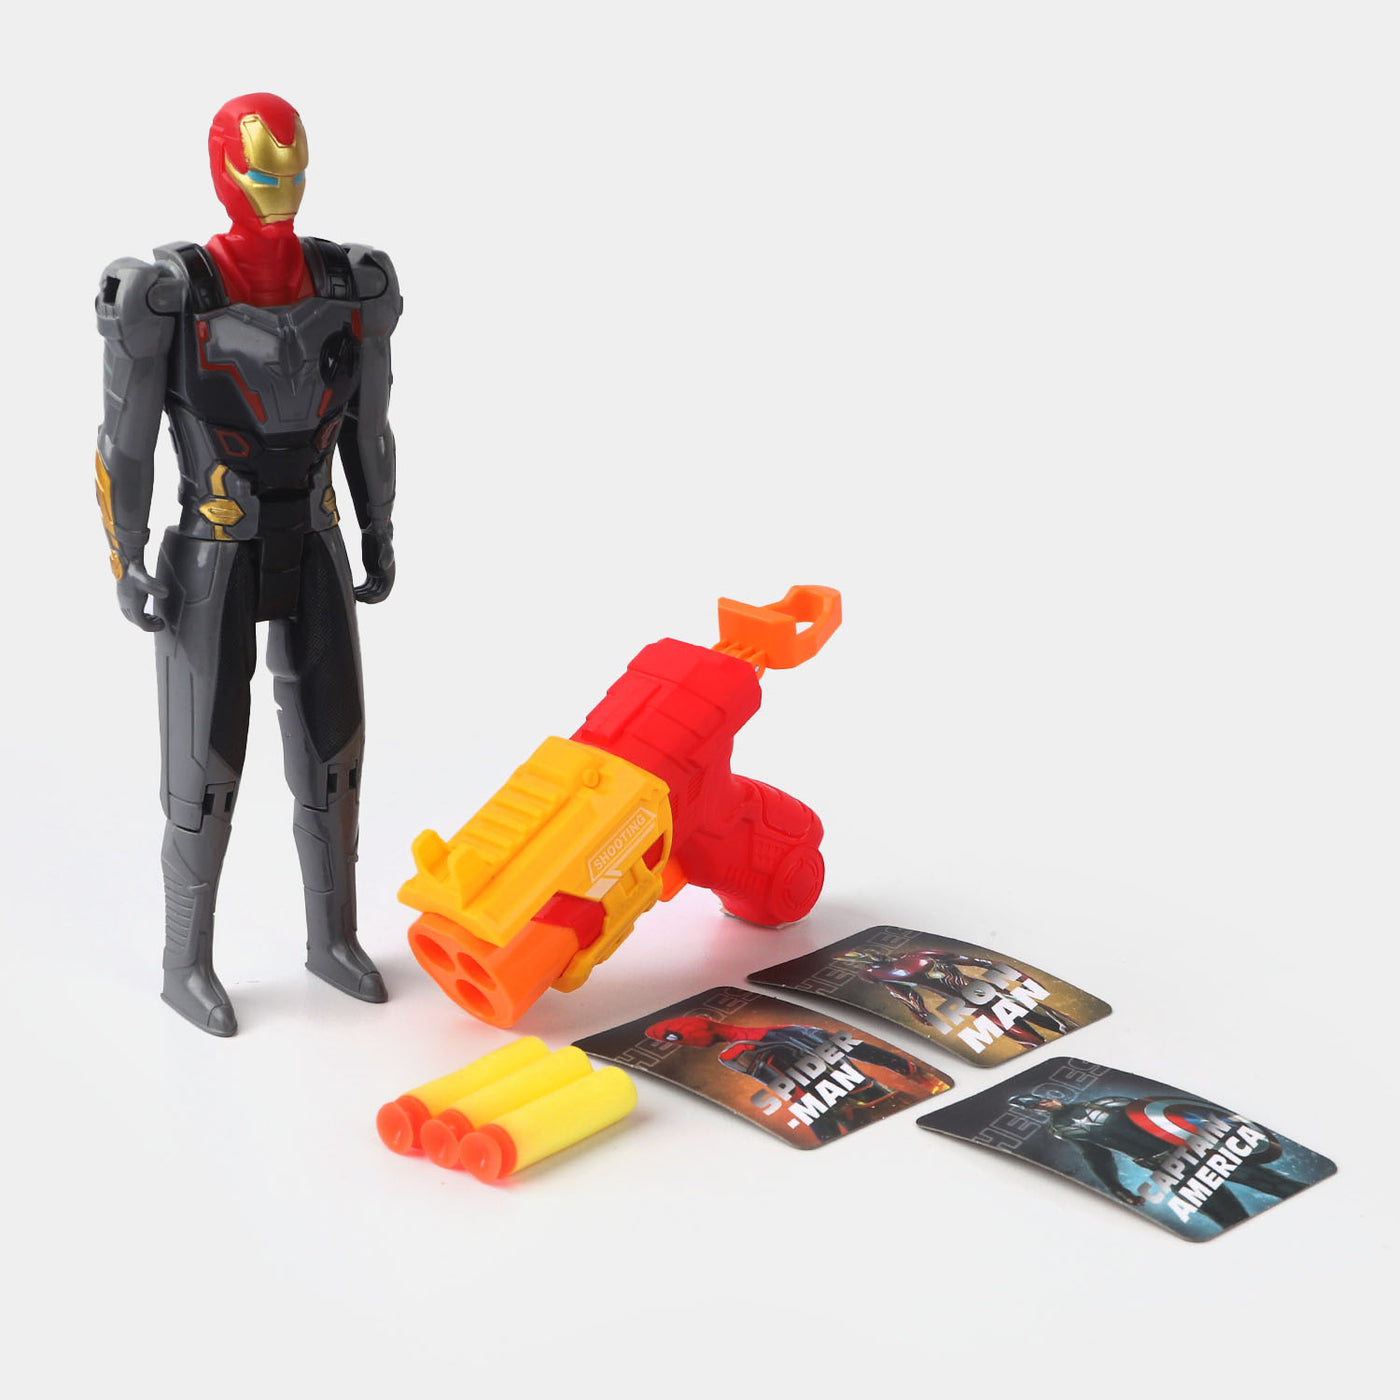 Soft Bullet Gun + Action Figure For Kids